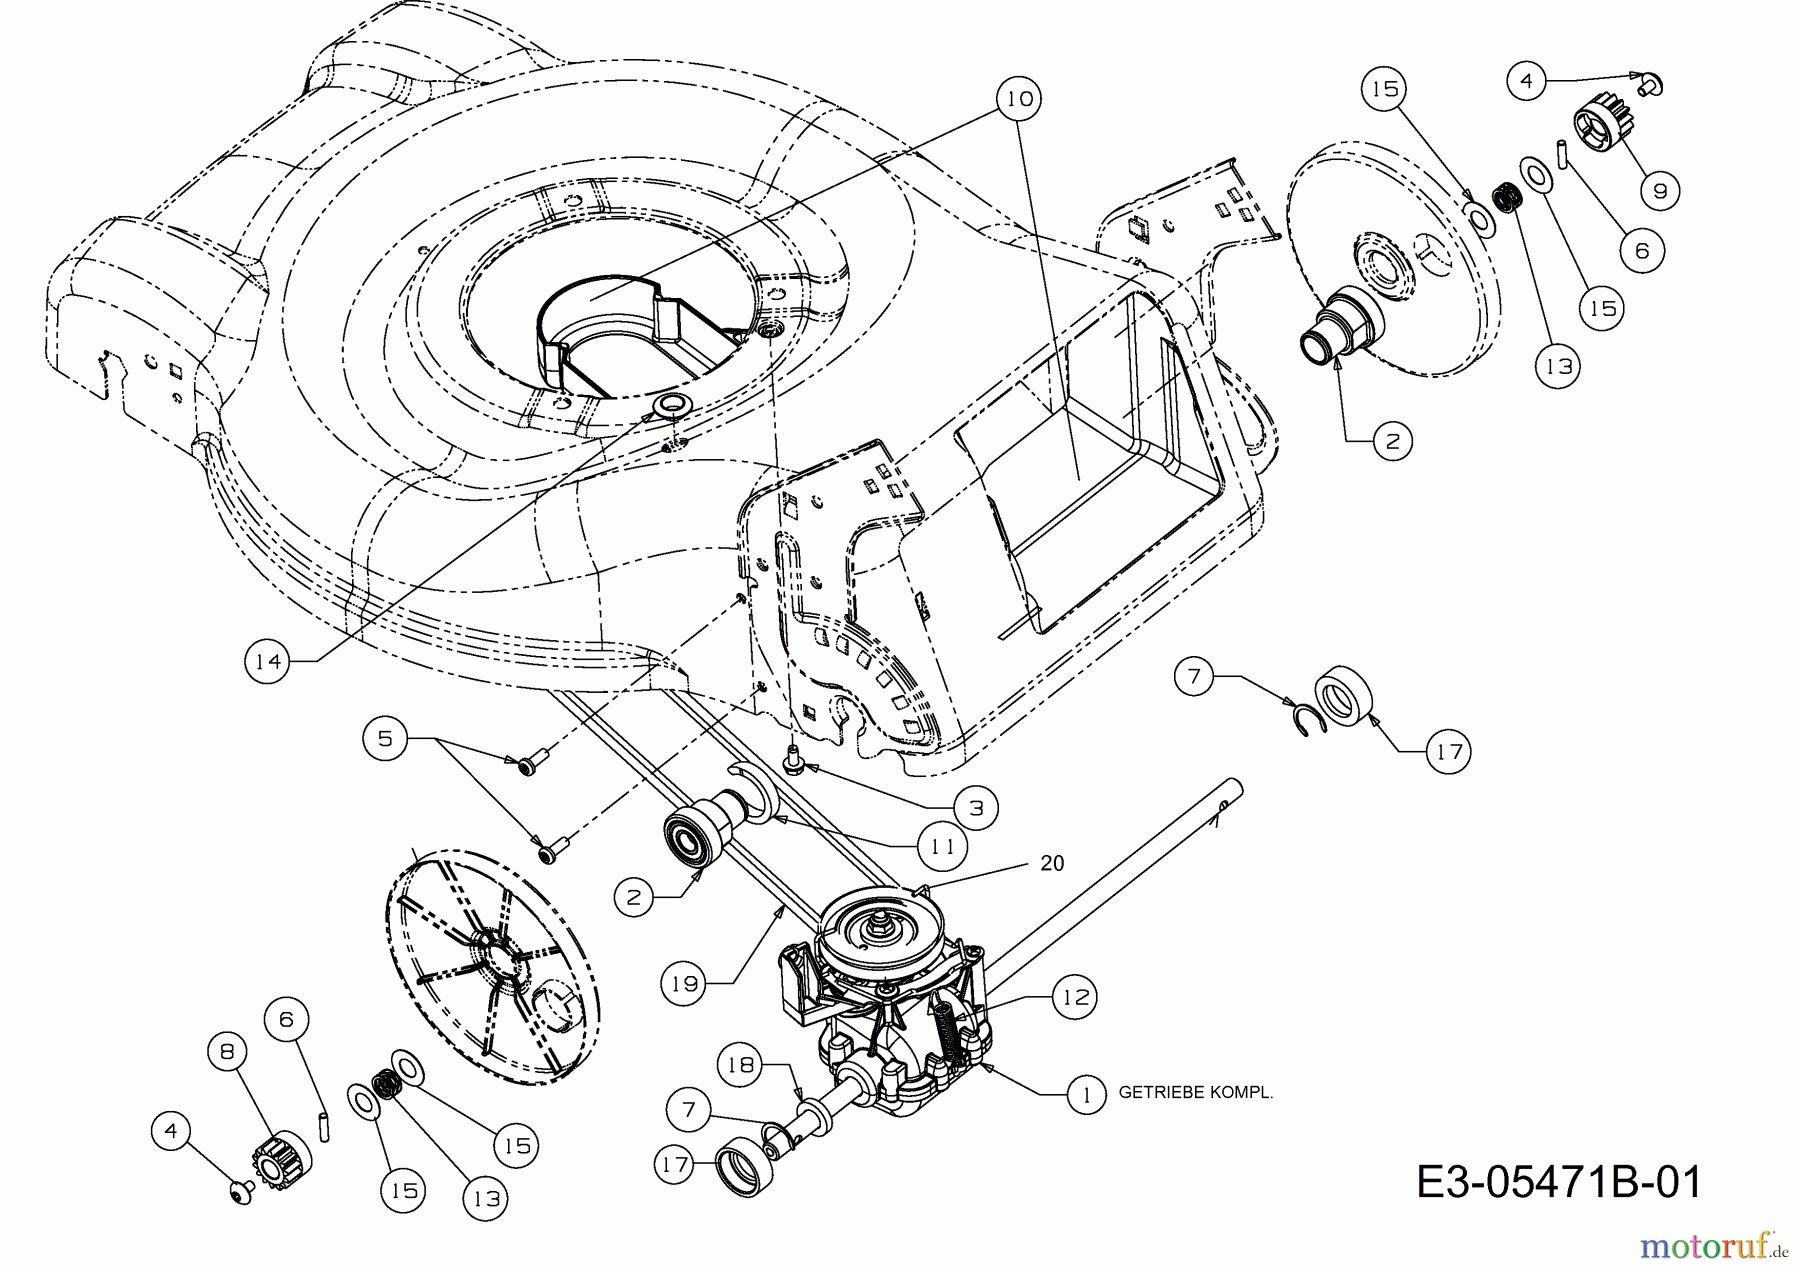  Mastercut Motormäher mit Antrieb MC 46 SPB 12A-J75B659  (2015) Getriebe, Keilriemen